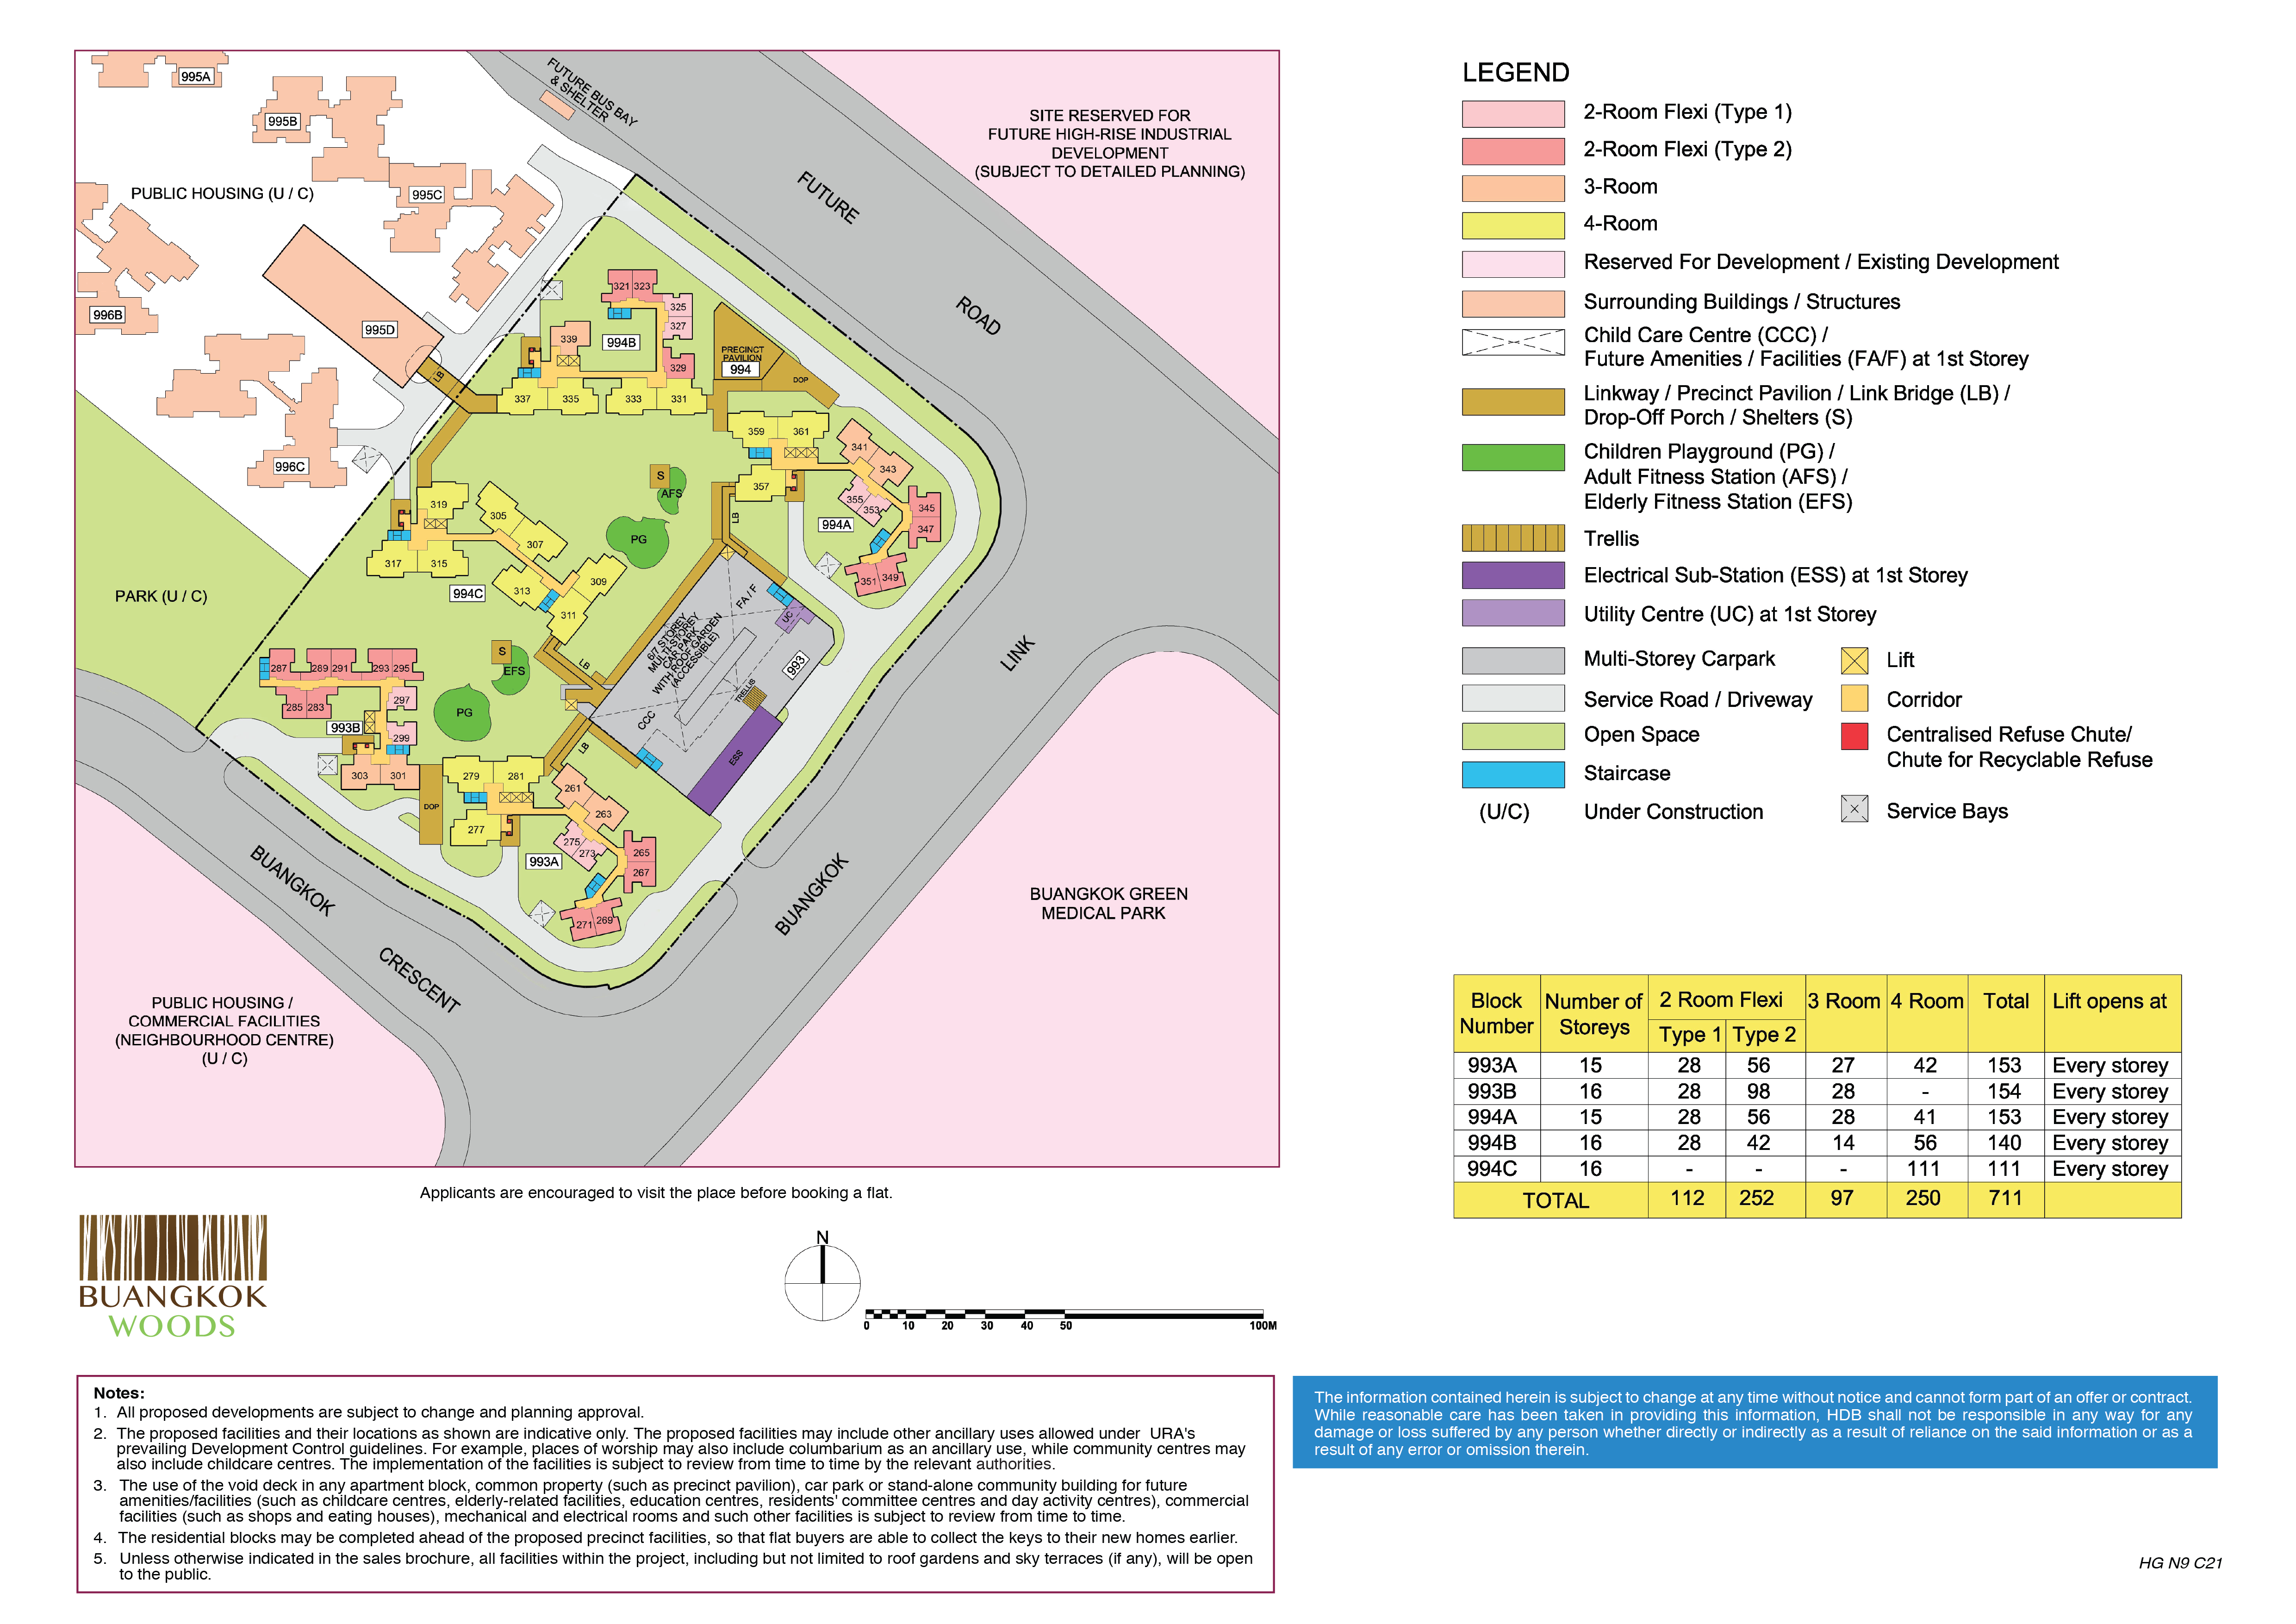 HDB Buangkok Woods - Singapore Property Review - FengShui.Geomancy.Net